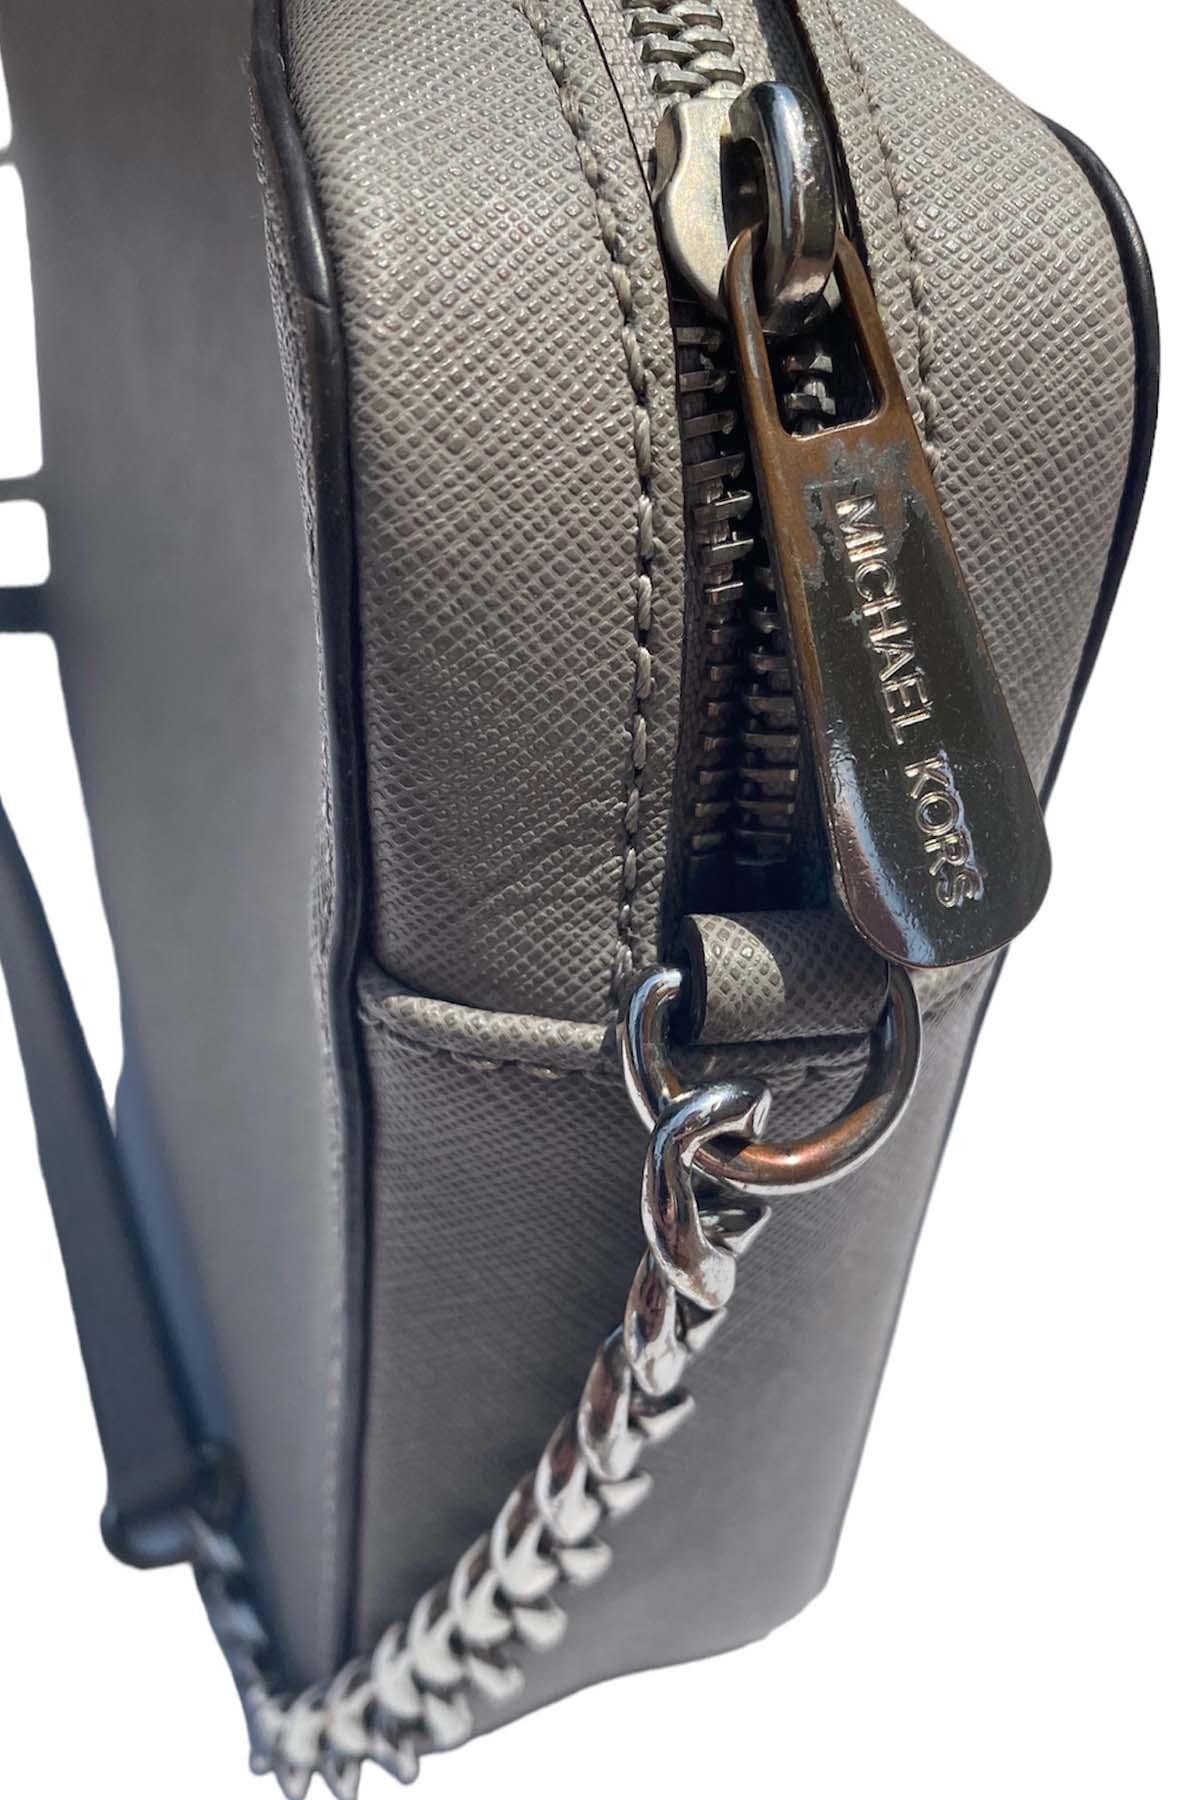 close up of a michael kors purse zipper.